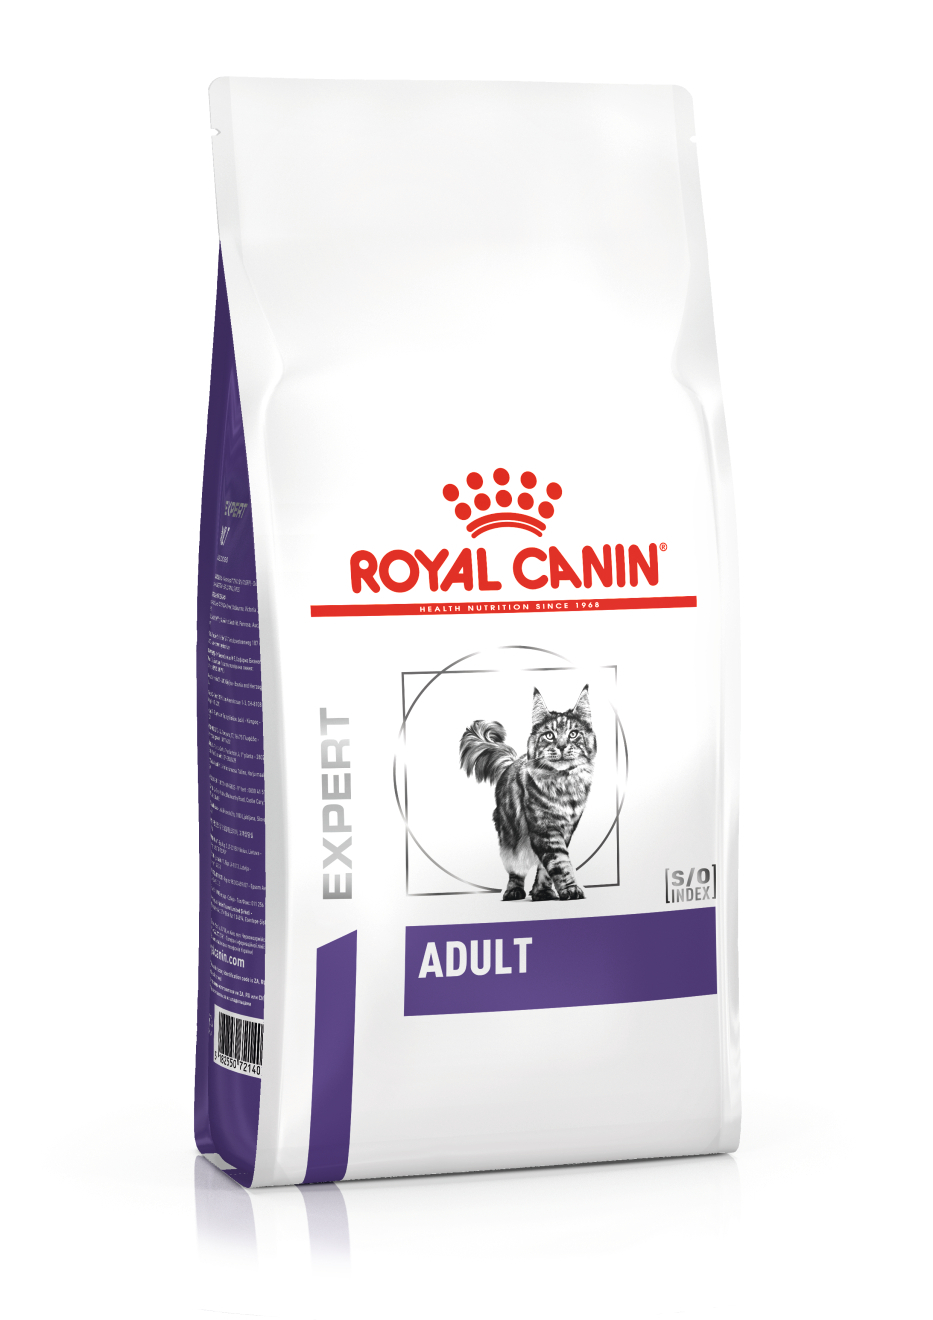 Royal Canin Veterinary Adult für Katzen